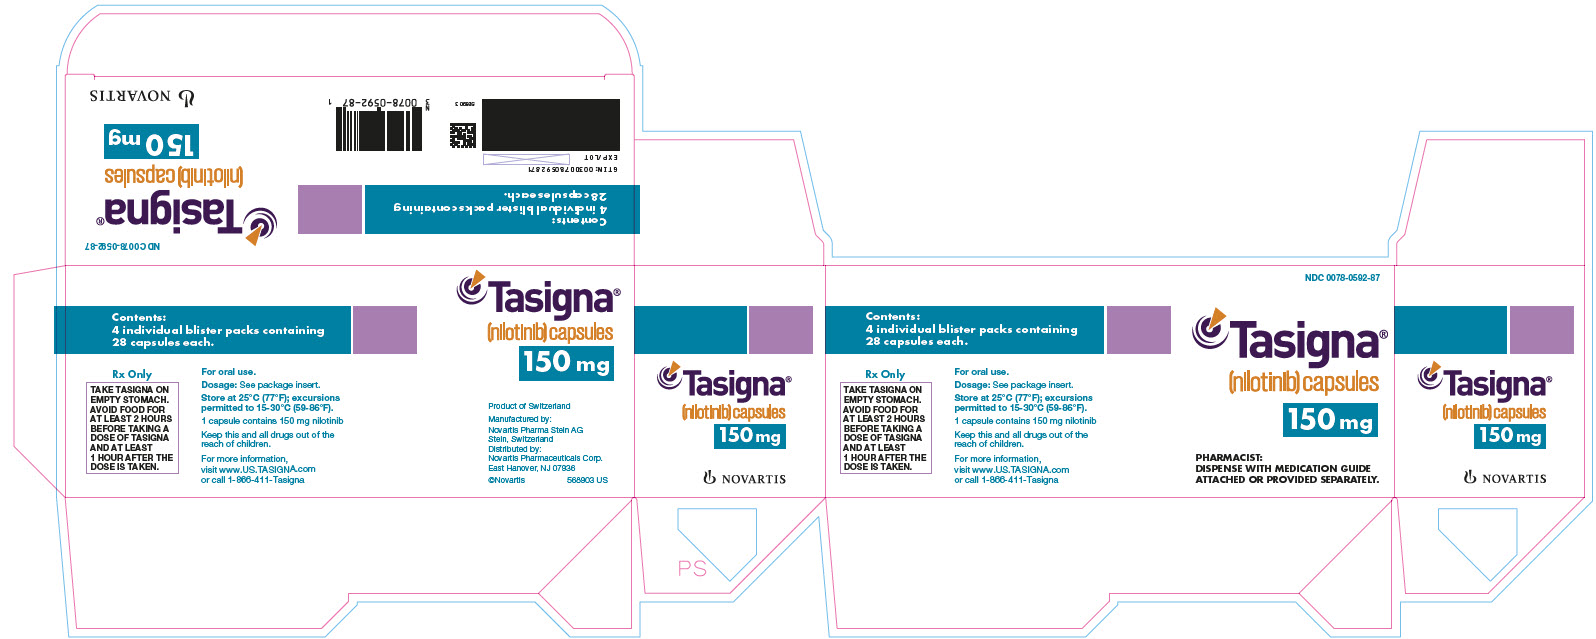 NDC 0078-0592-87
Tasigna
(nilotinib) capsules
150 mg
							